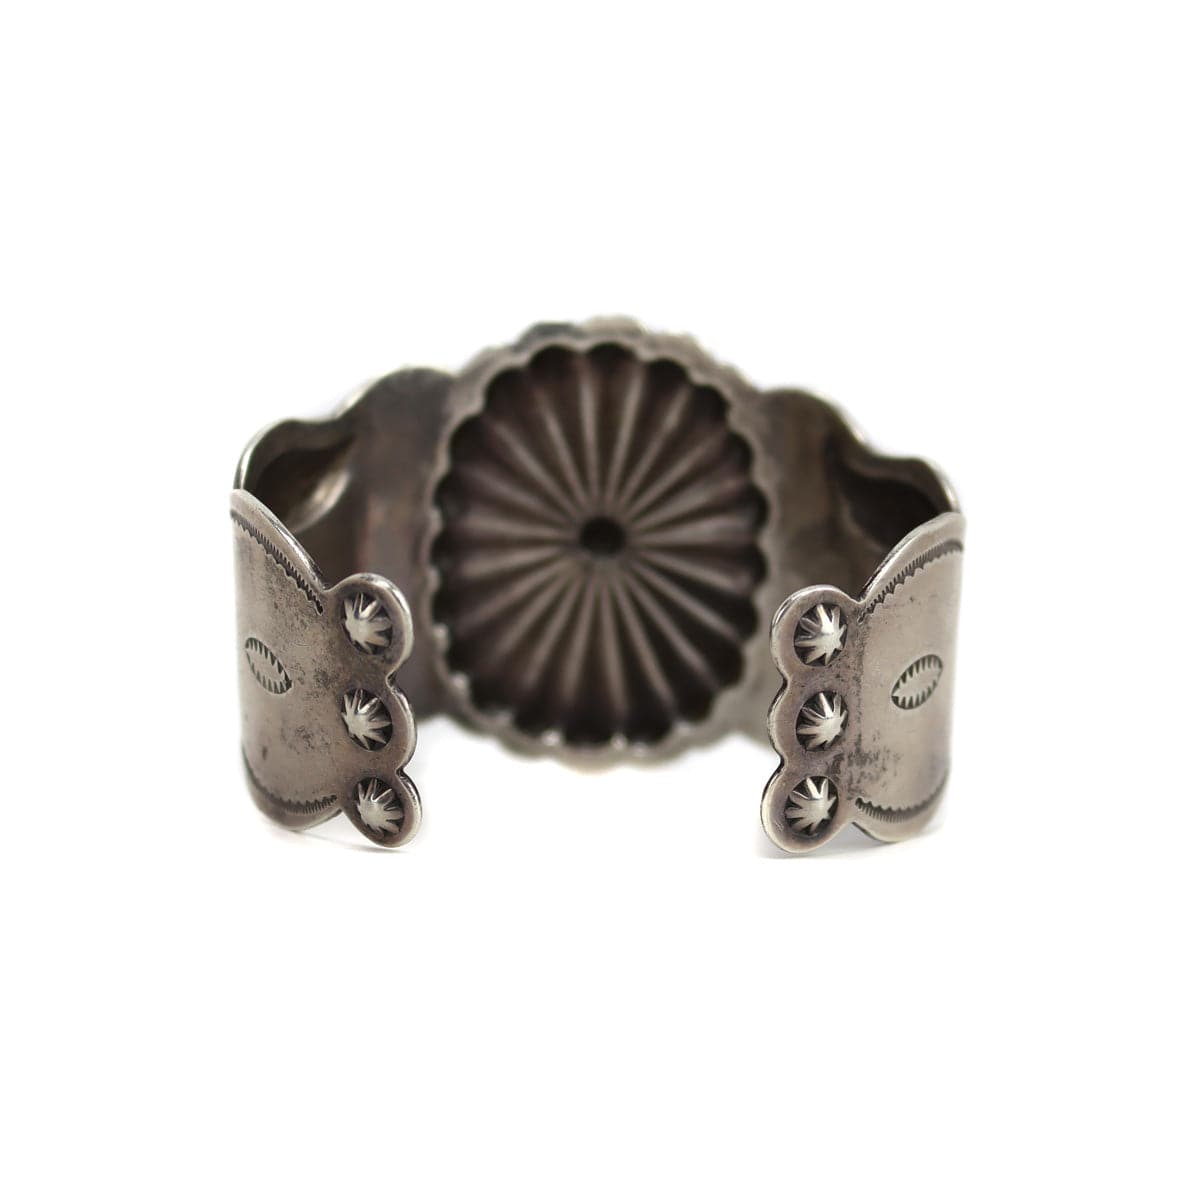 Navajo - Ingot Silver Bracelet with Stamped Design c. 1920s, size 6.75 (J90105-0623-019)